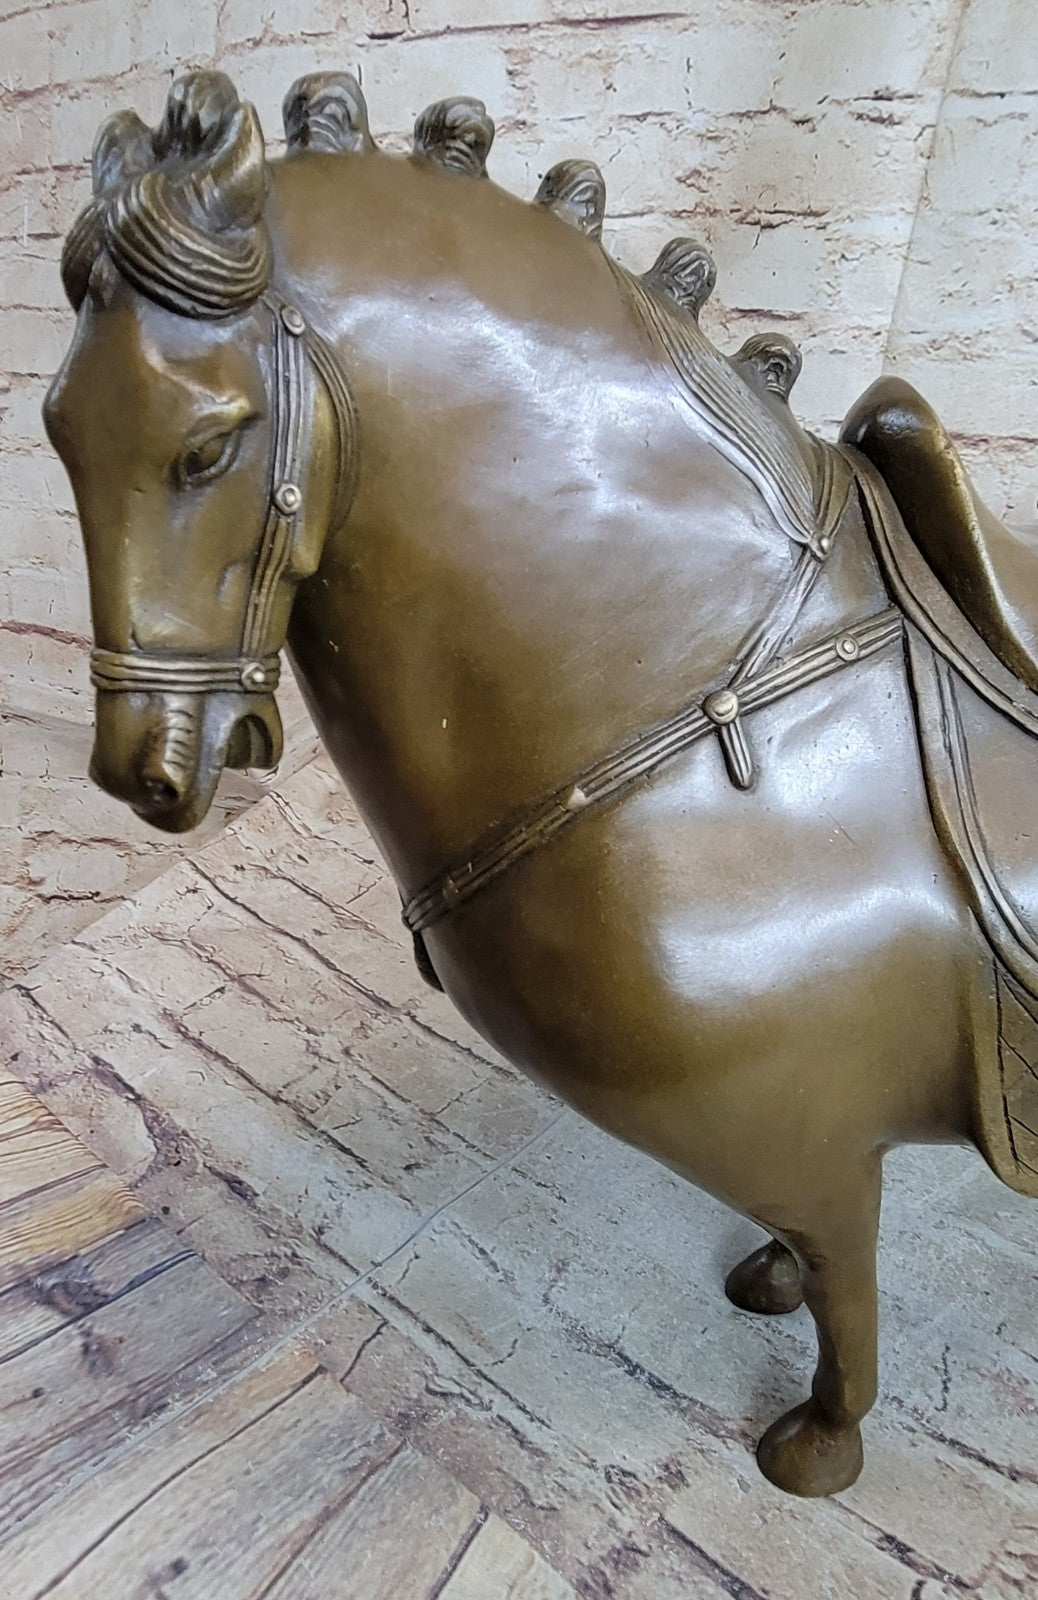 inged original Collector Edition B.C Zhang Tang Horse Bronze Sculpture Figure